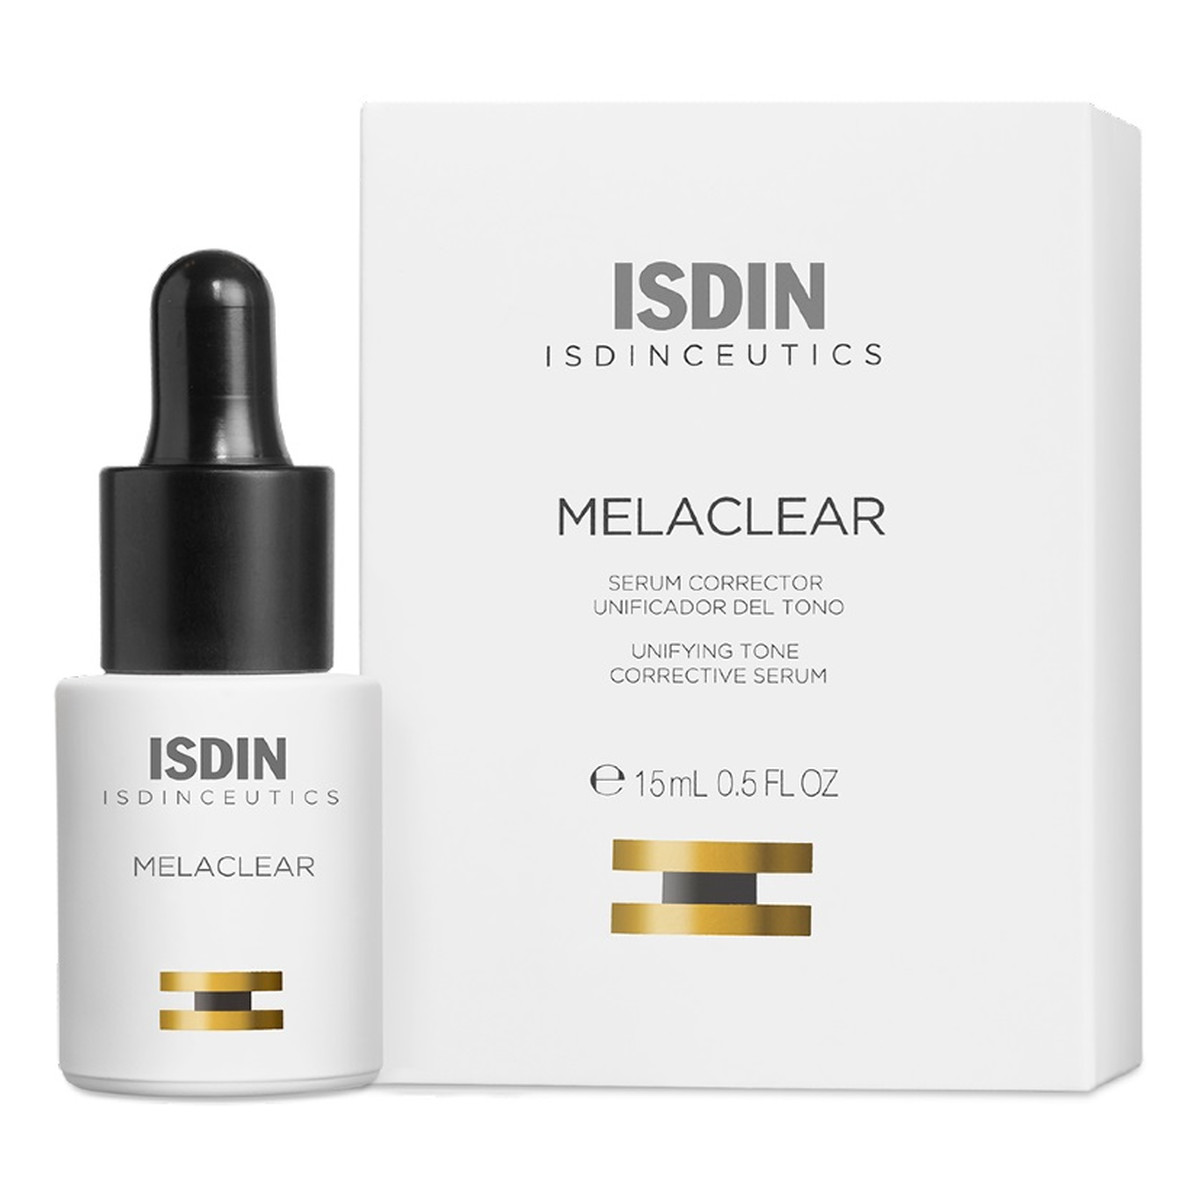 Isdin Isdinceutics melaclear korygujące serum wyrównujące koloryt skóry 15ml